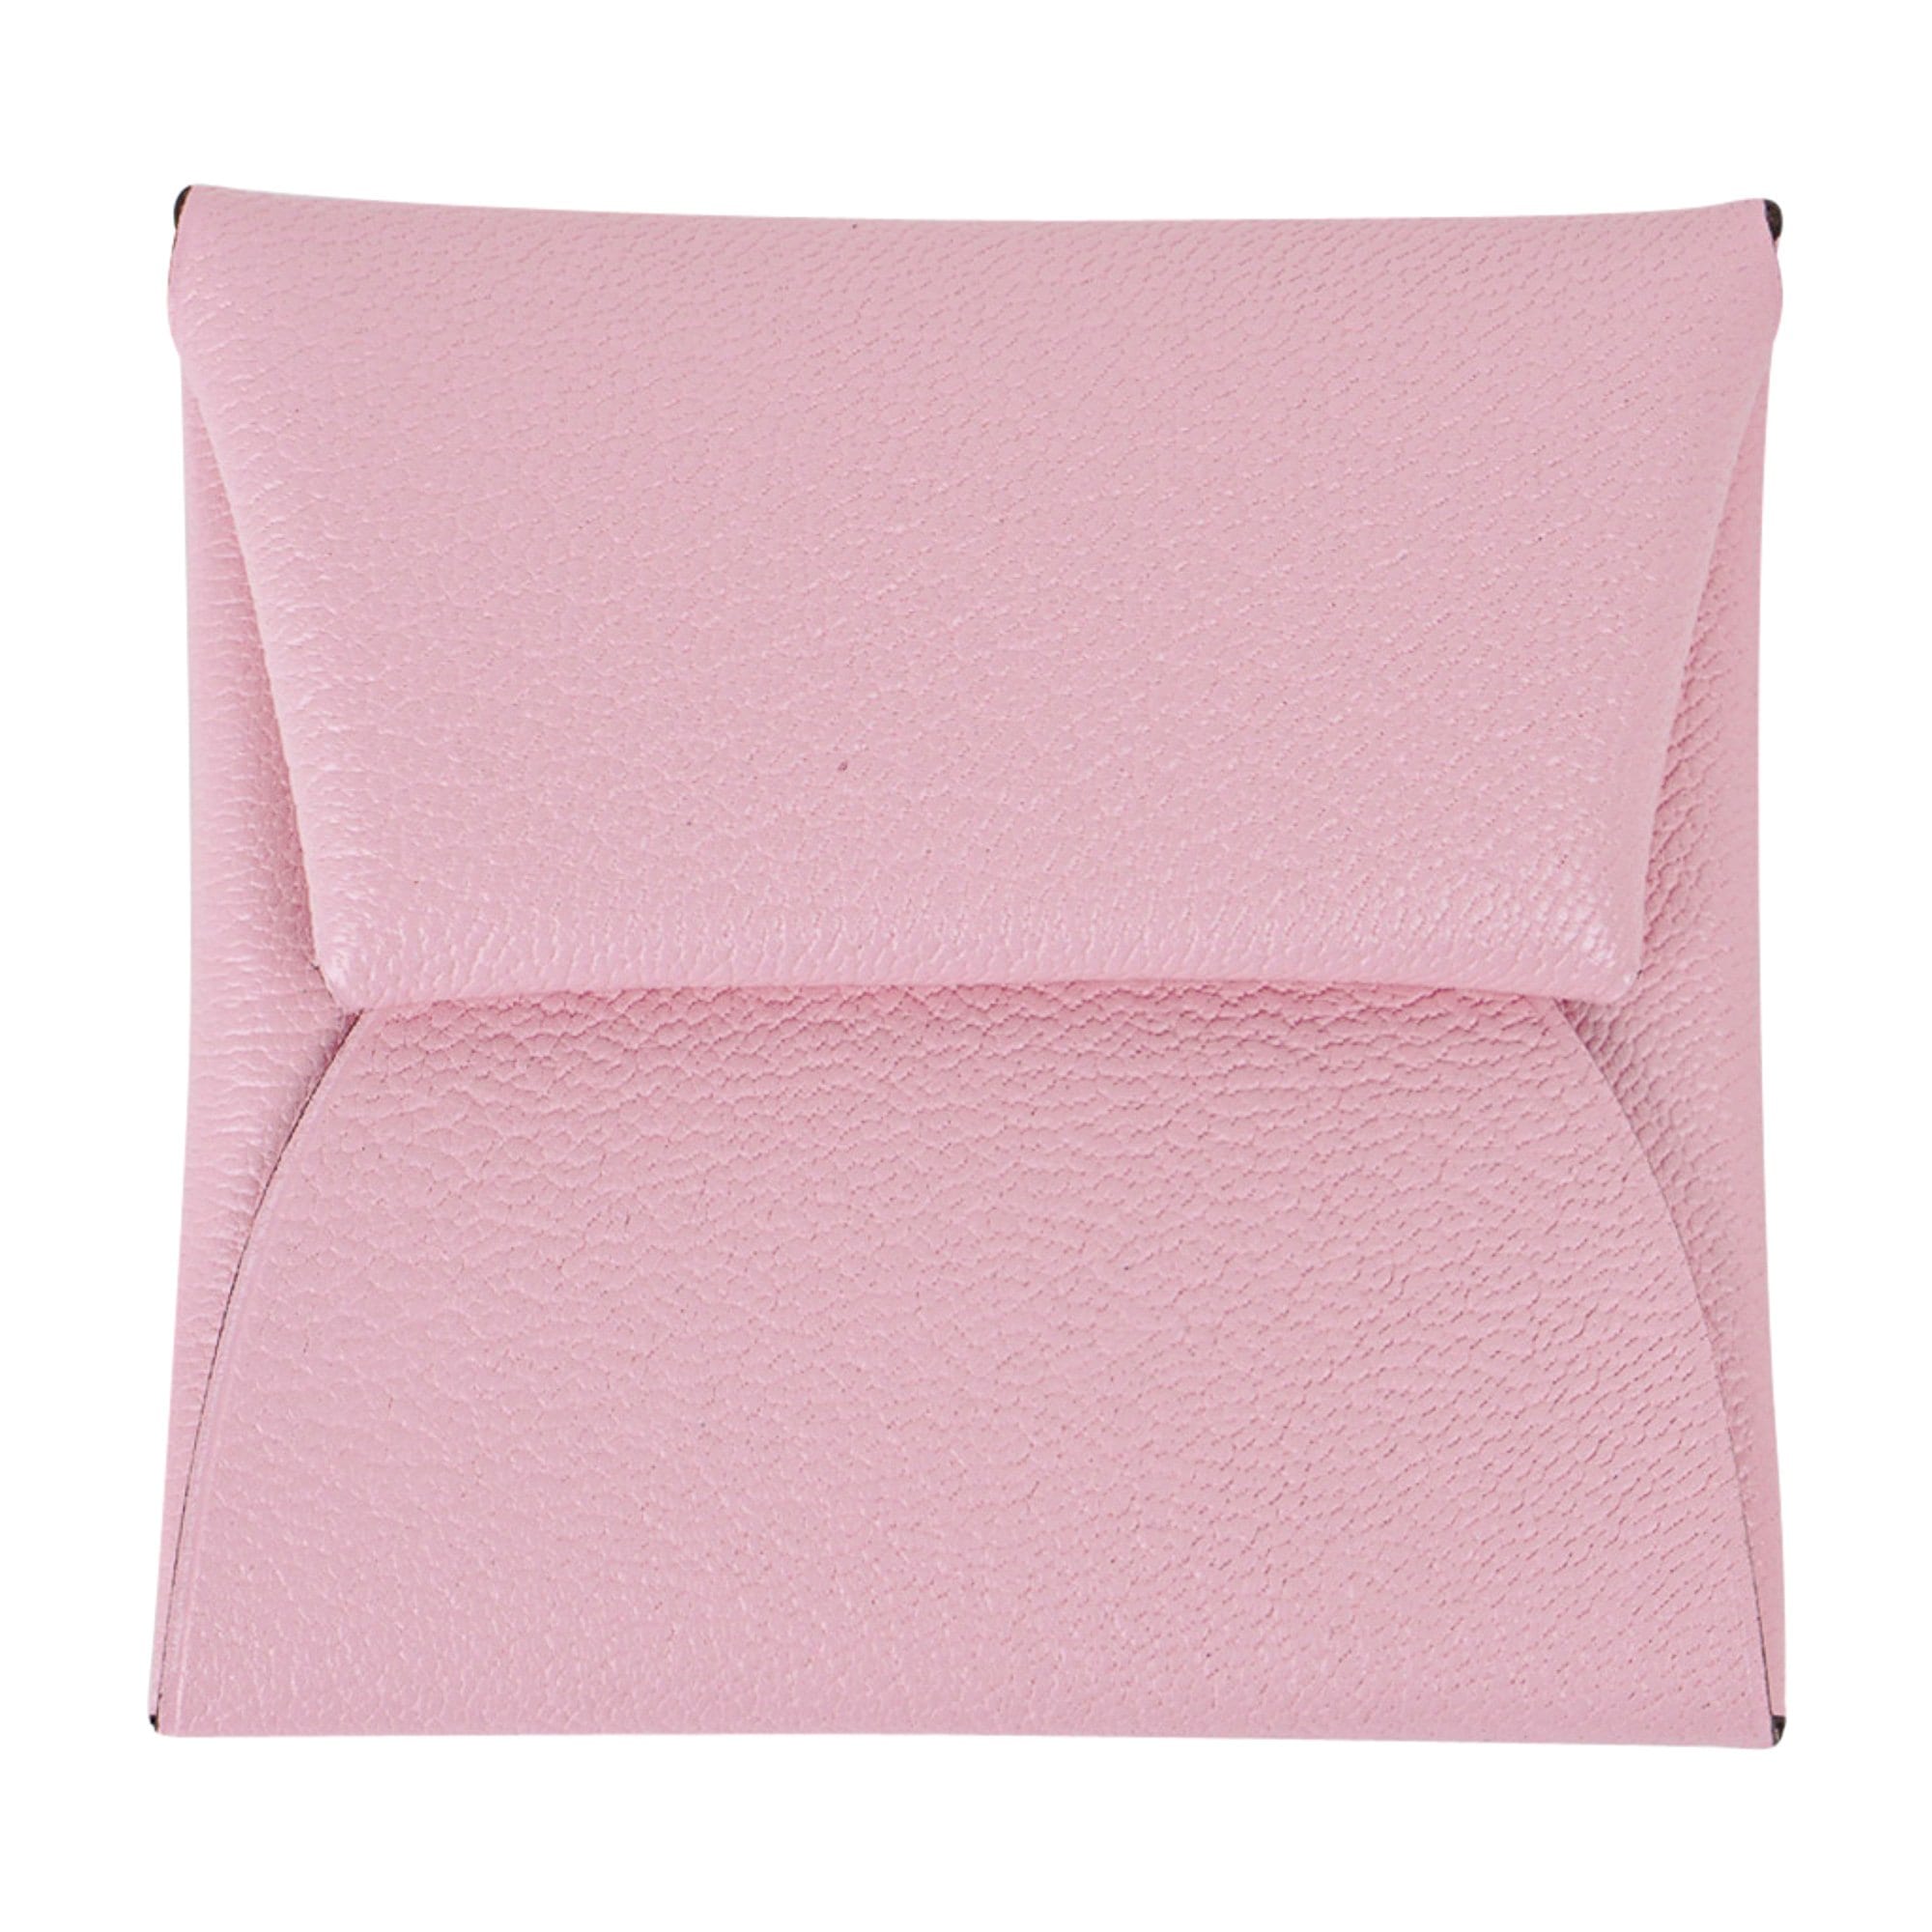 Hermes Bastia Change Purse Rose Sakura Pink Chevre Leather